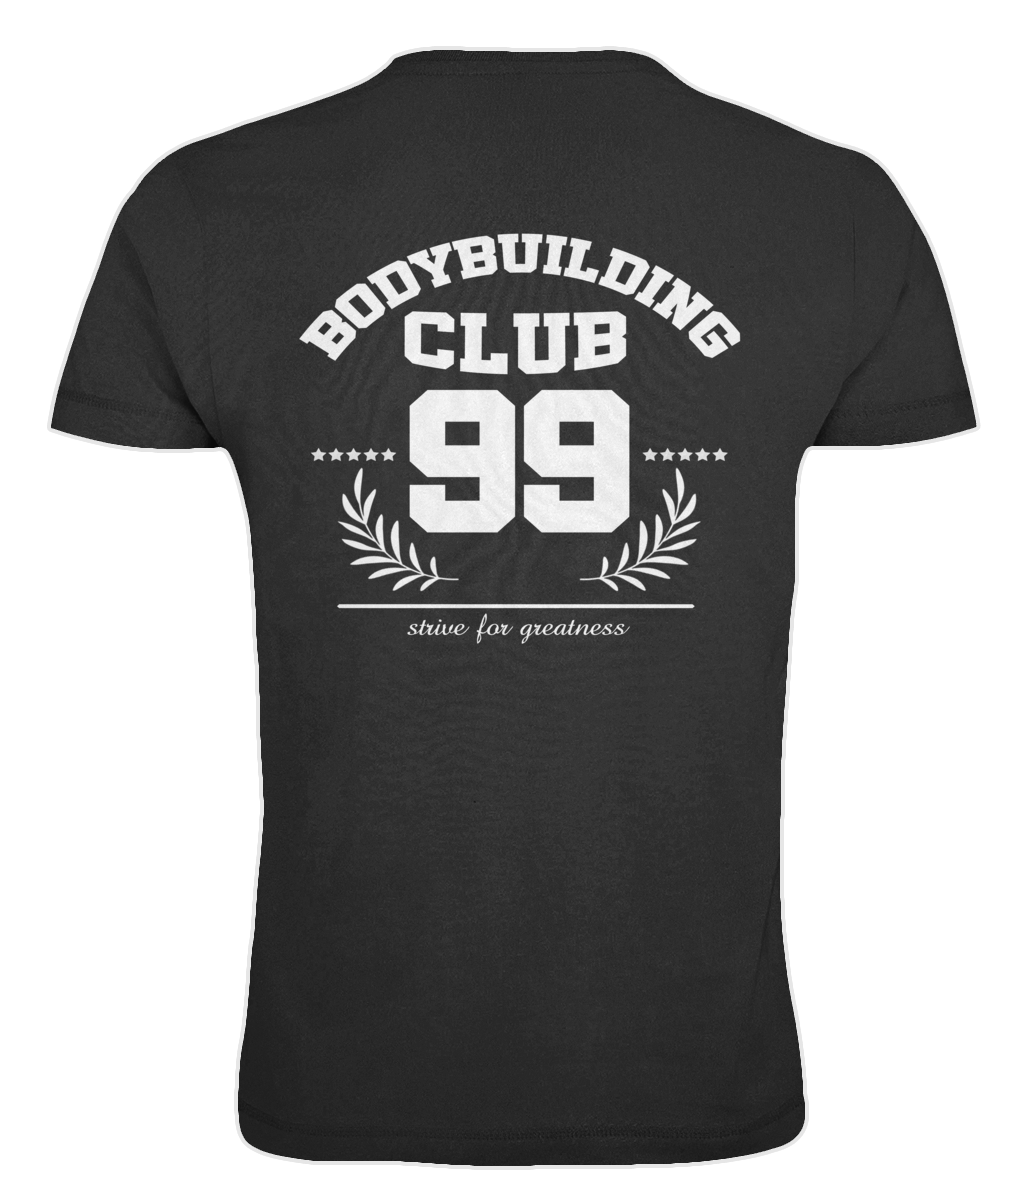 "Bodybuilding club" - Oversized T-shirt